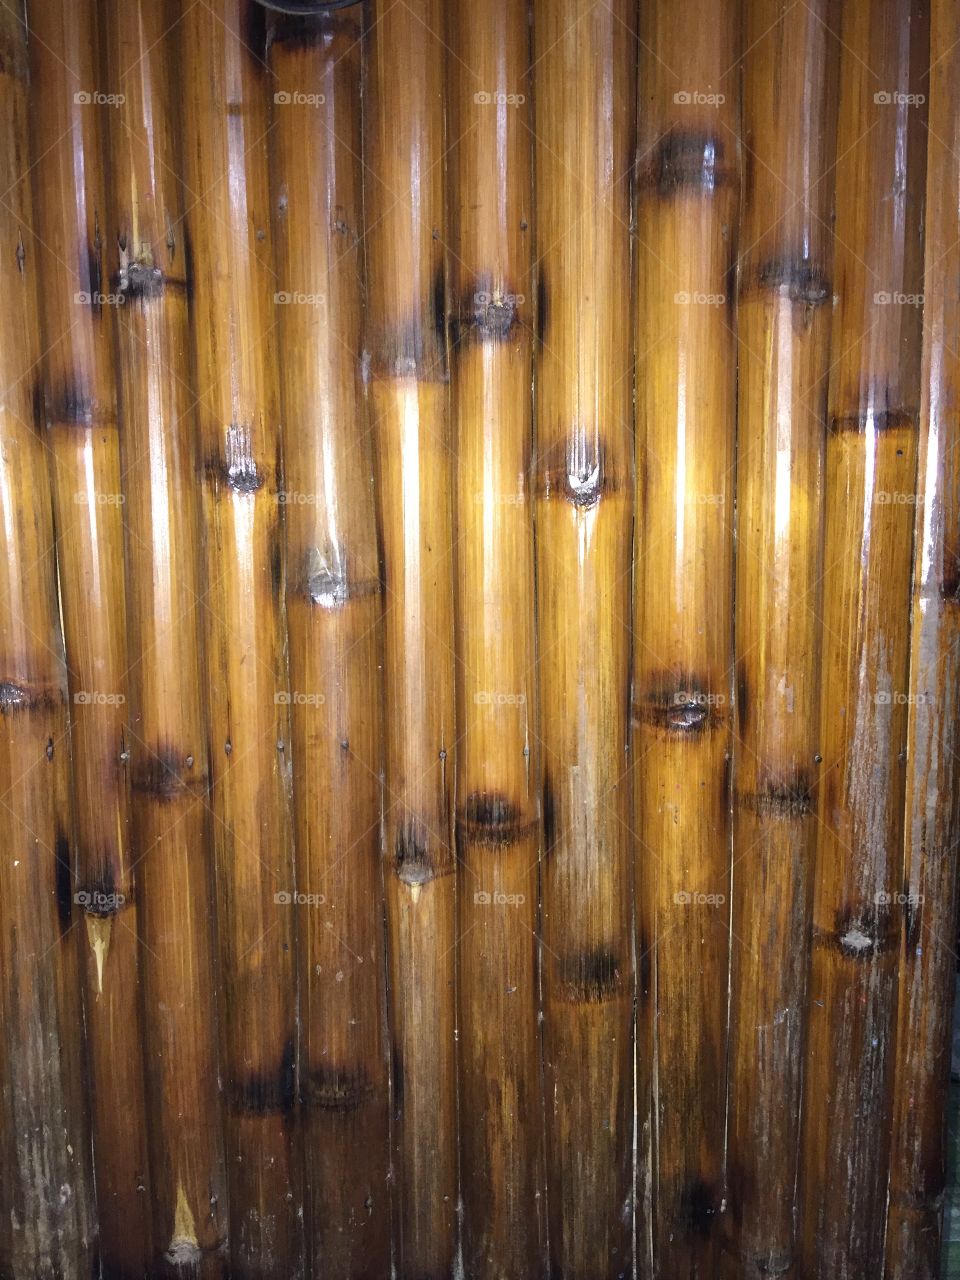 Bamboo
